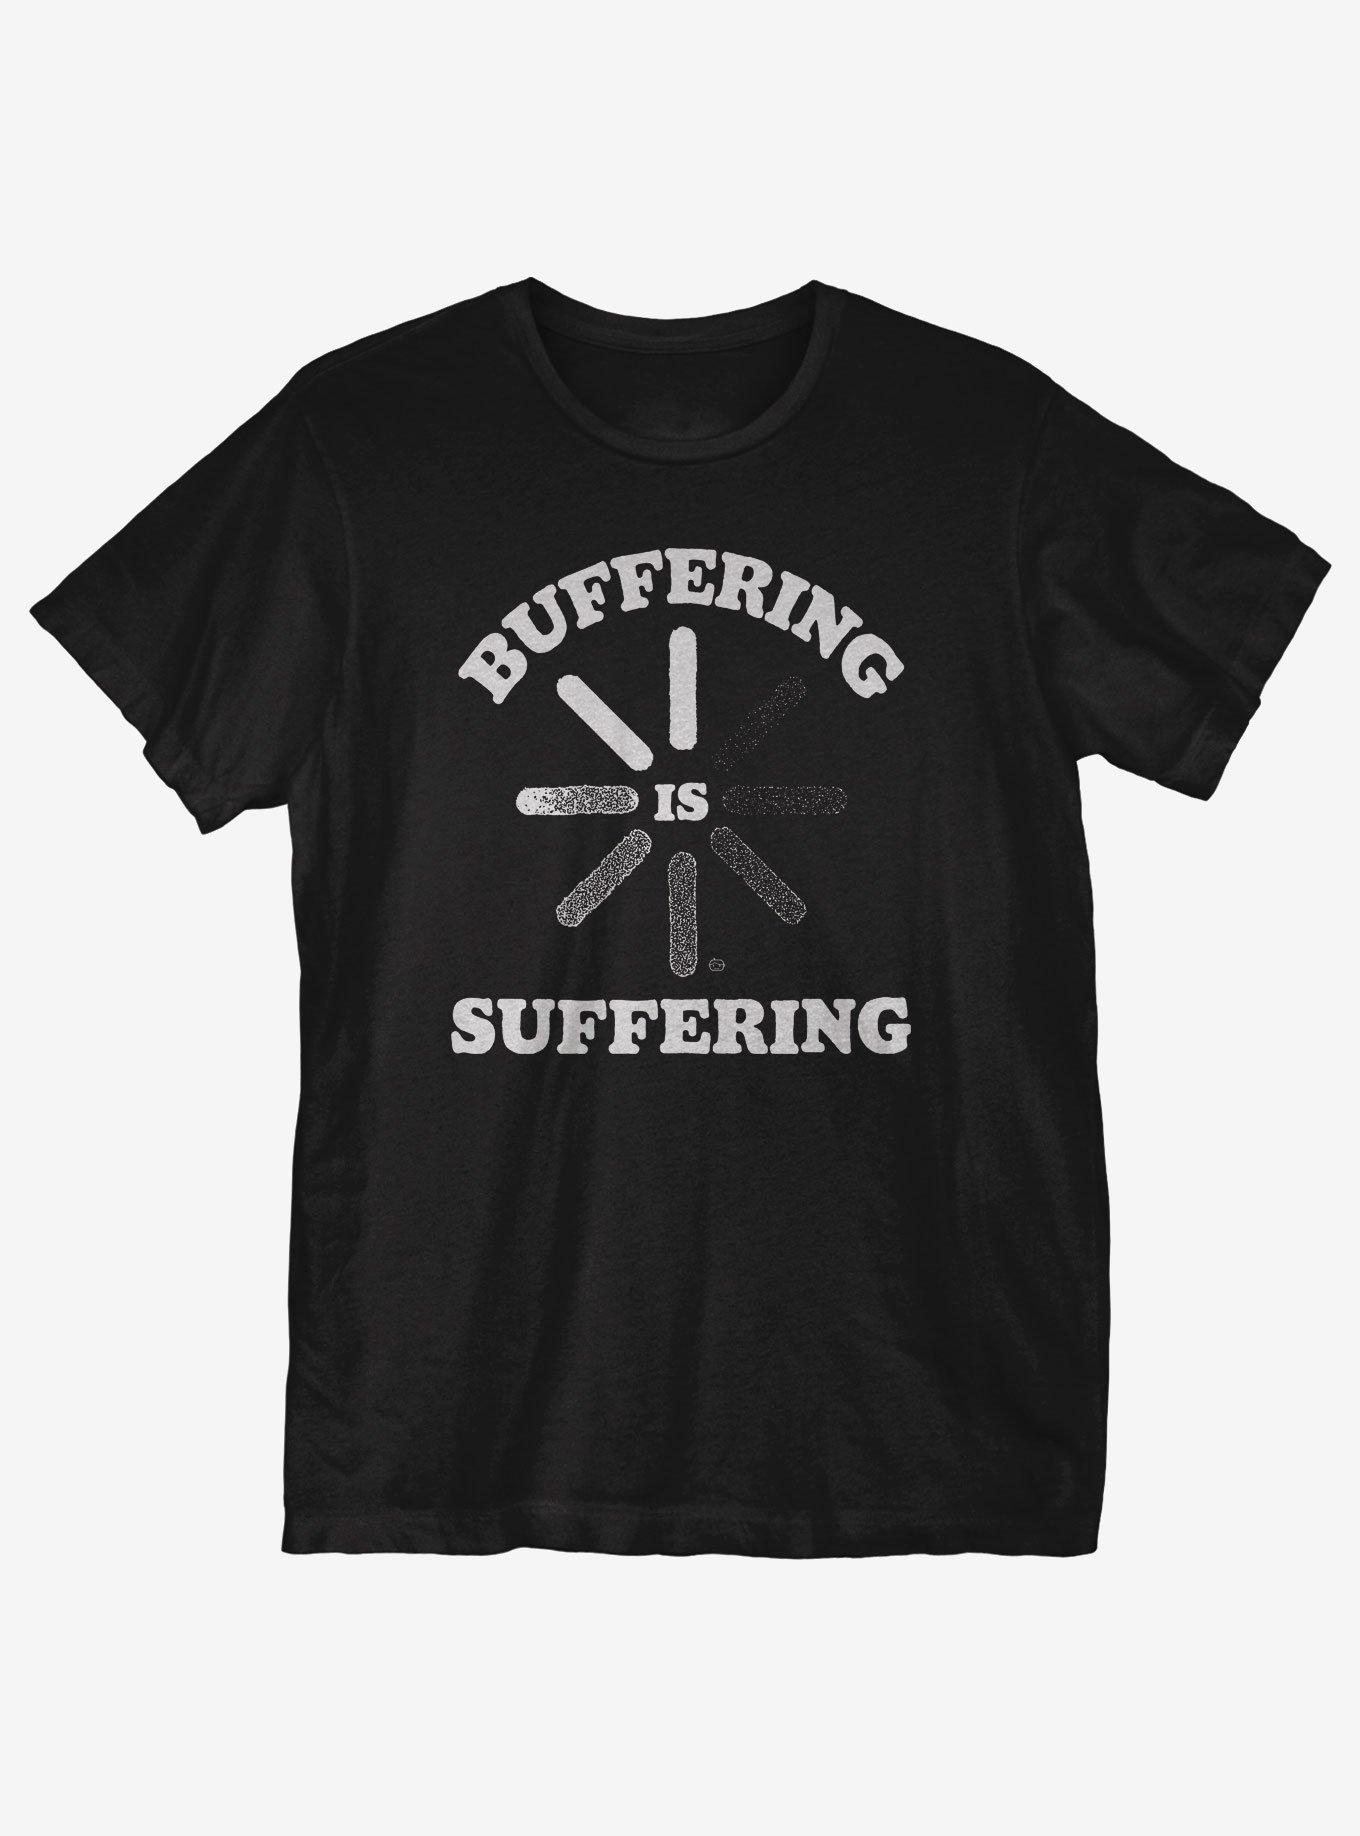 Buffering is Suffering T-Shirt, BLACK, hi-res